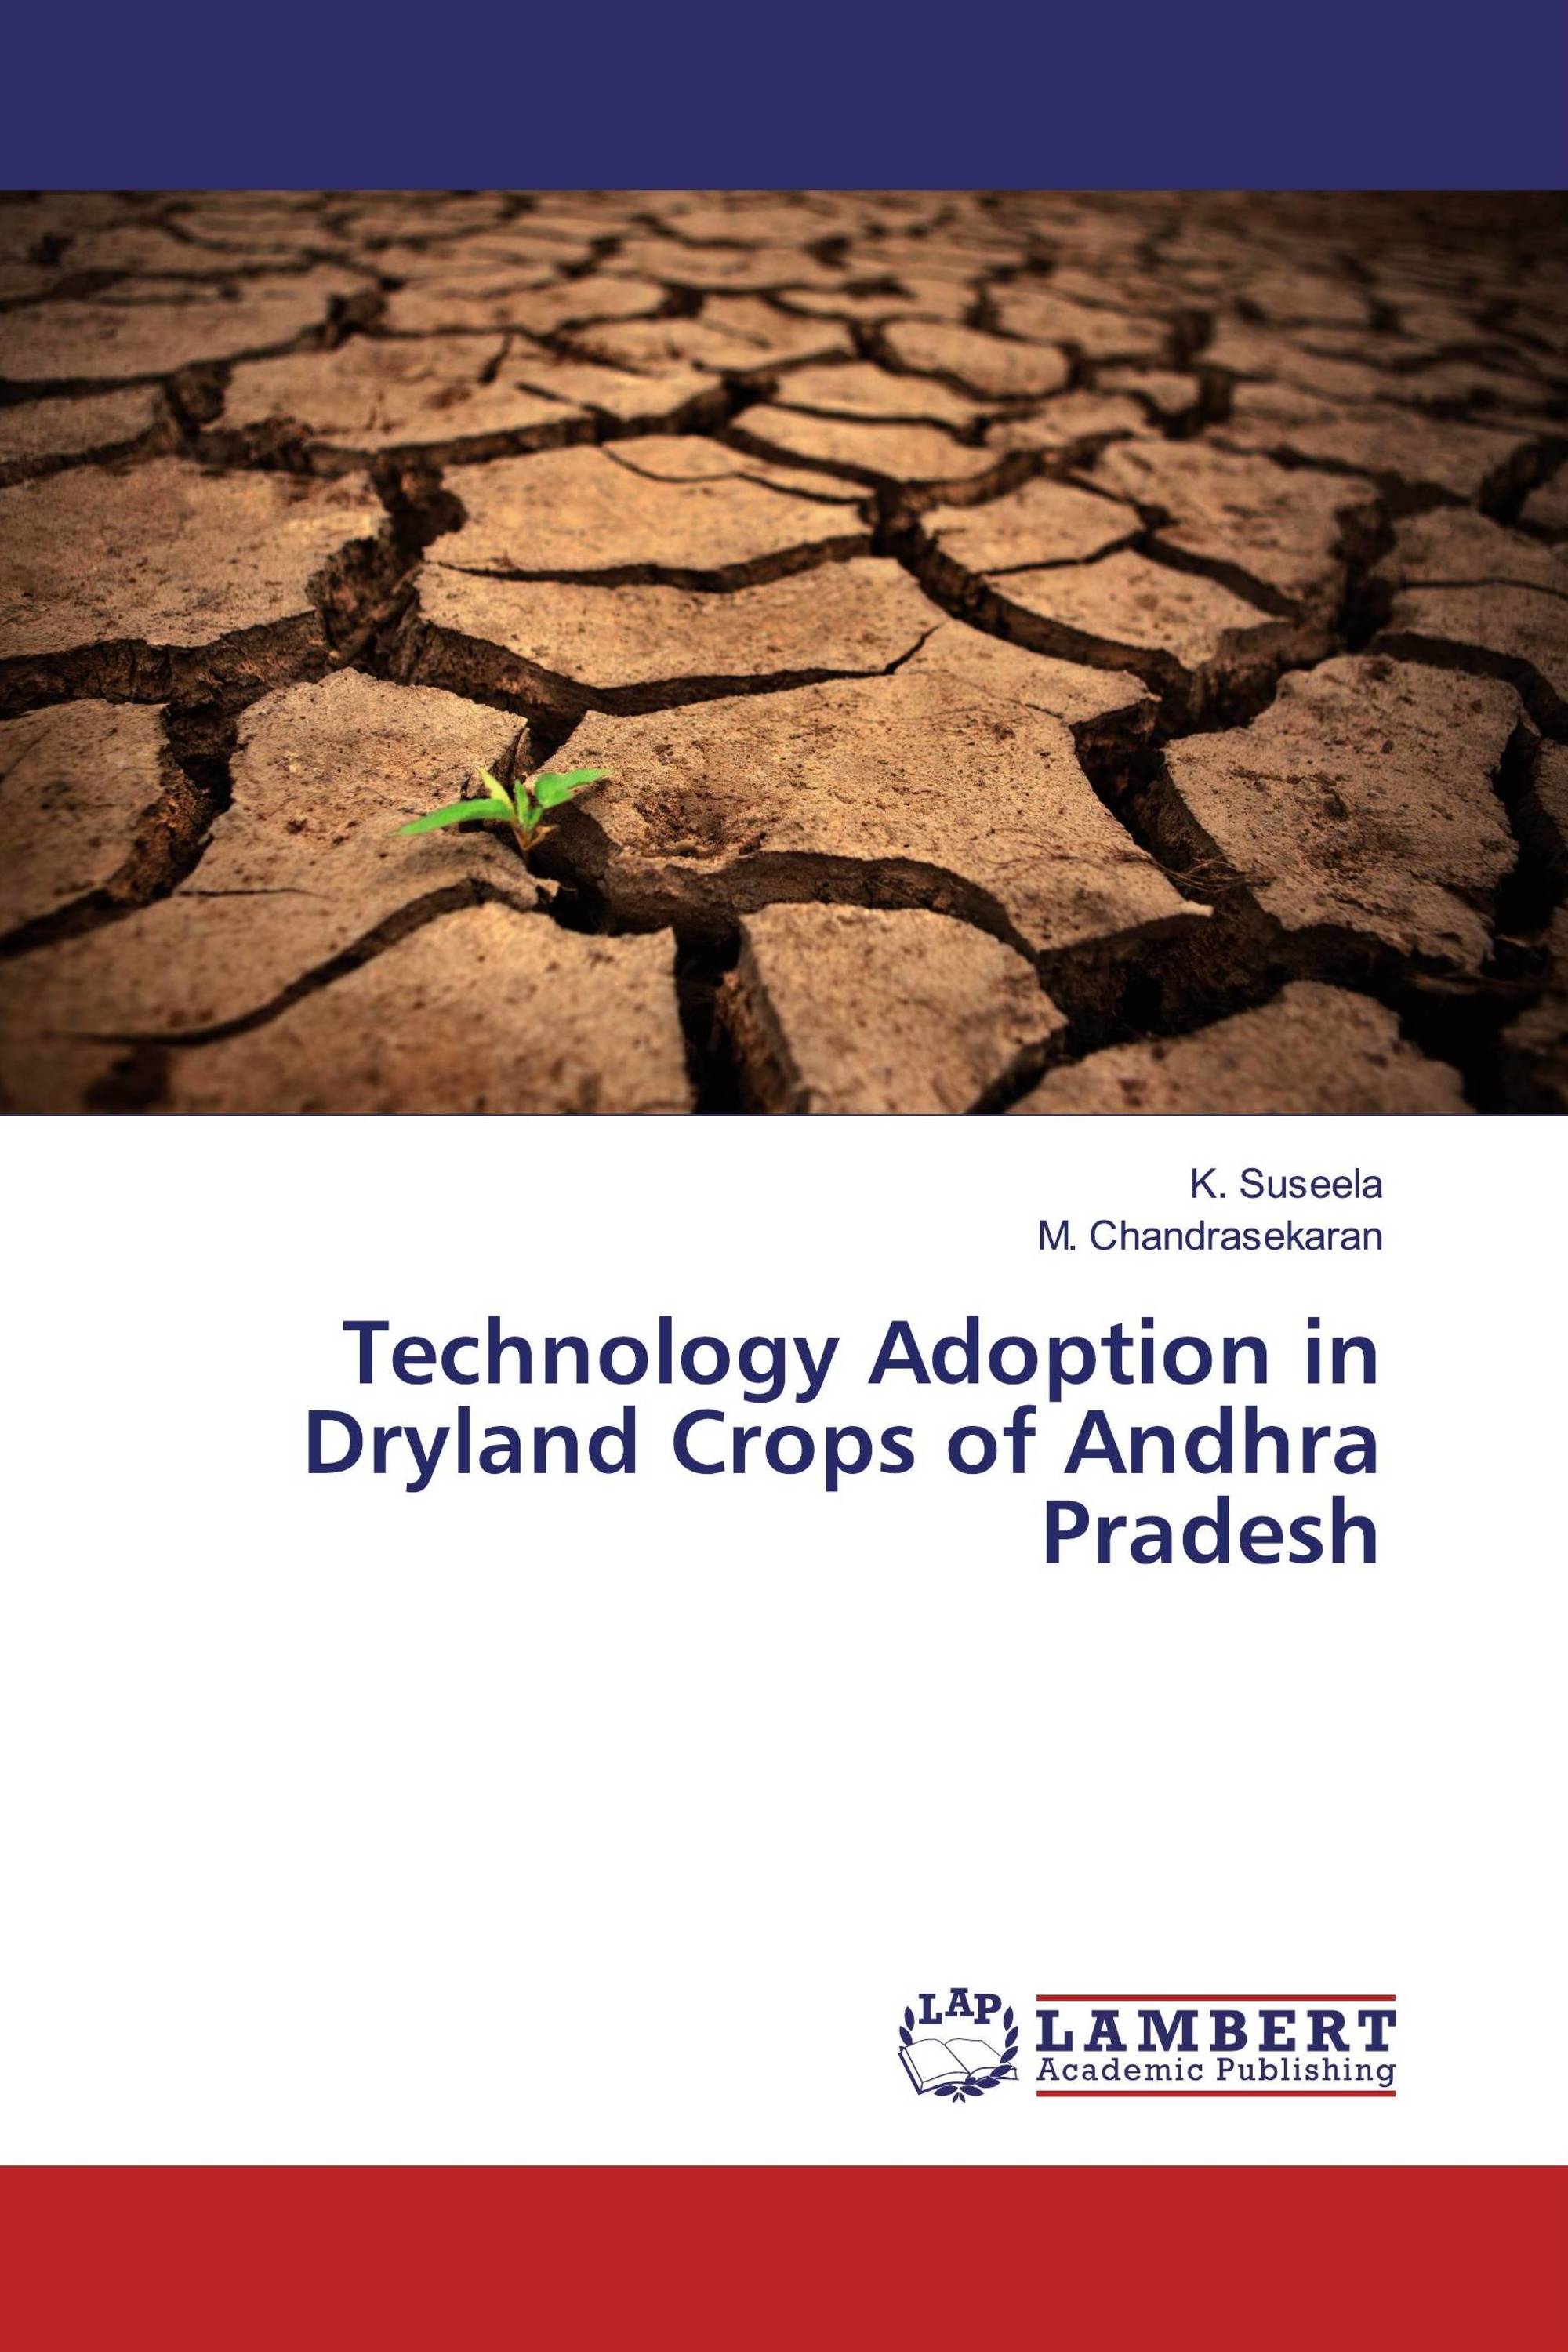 technology in andhra pradesh essay